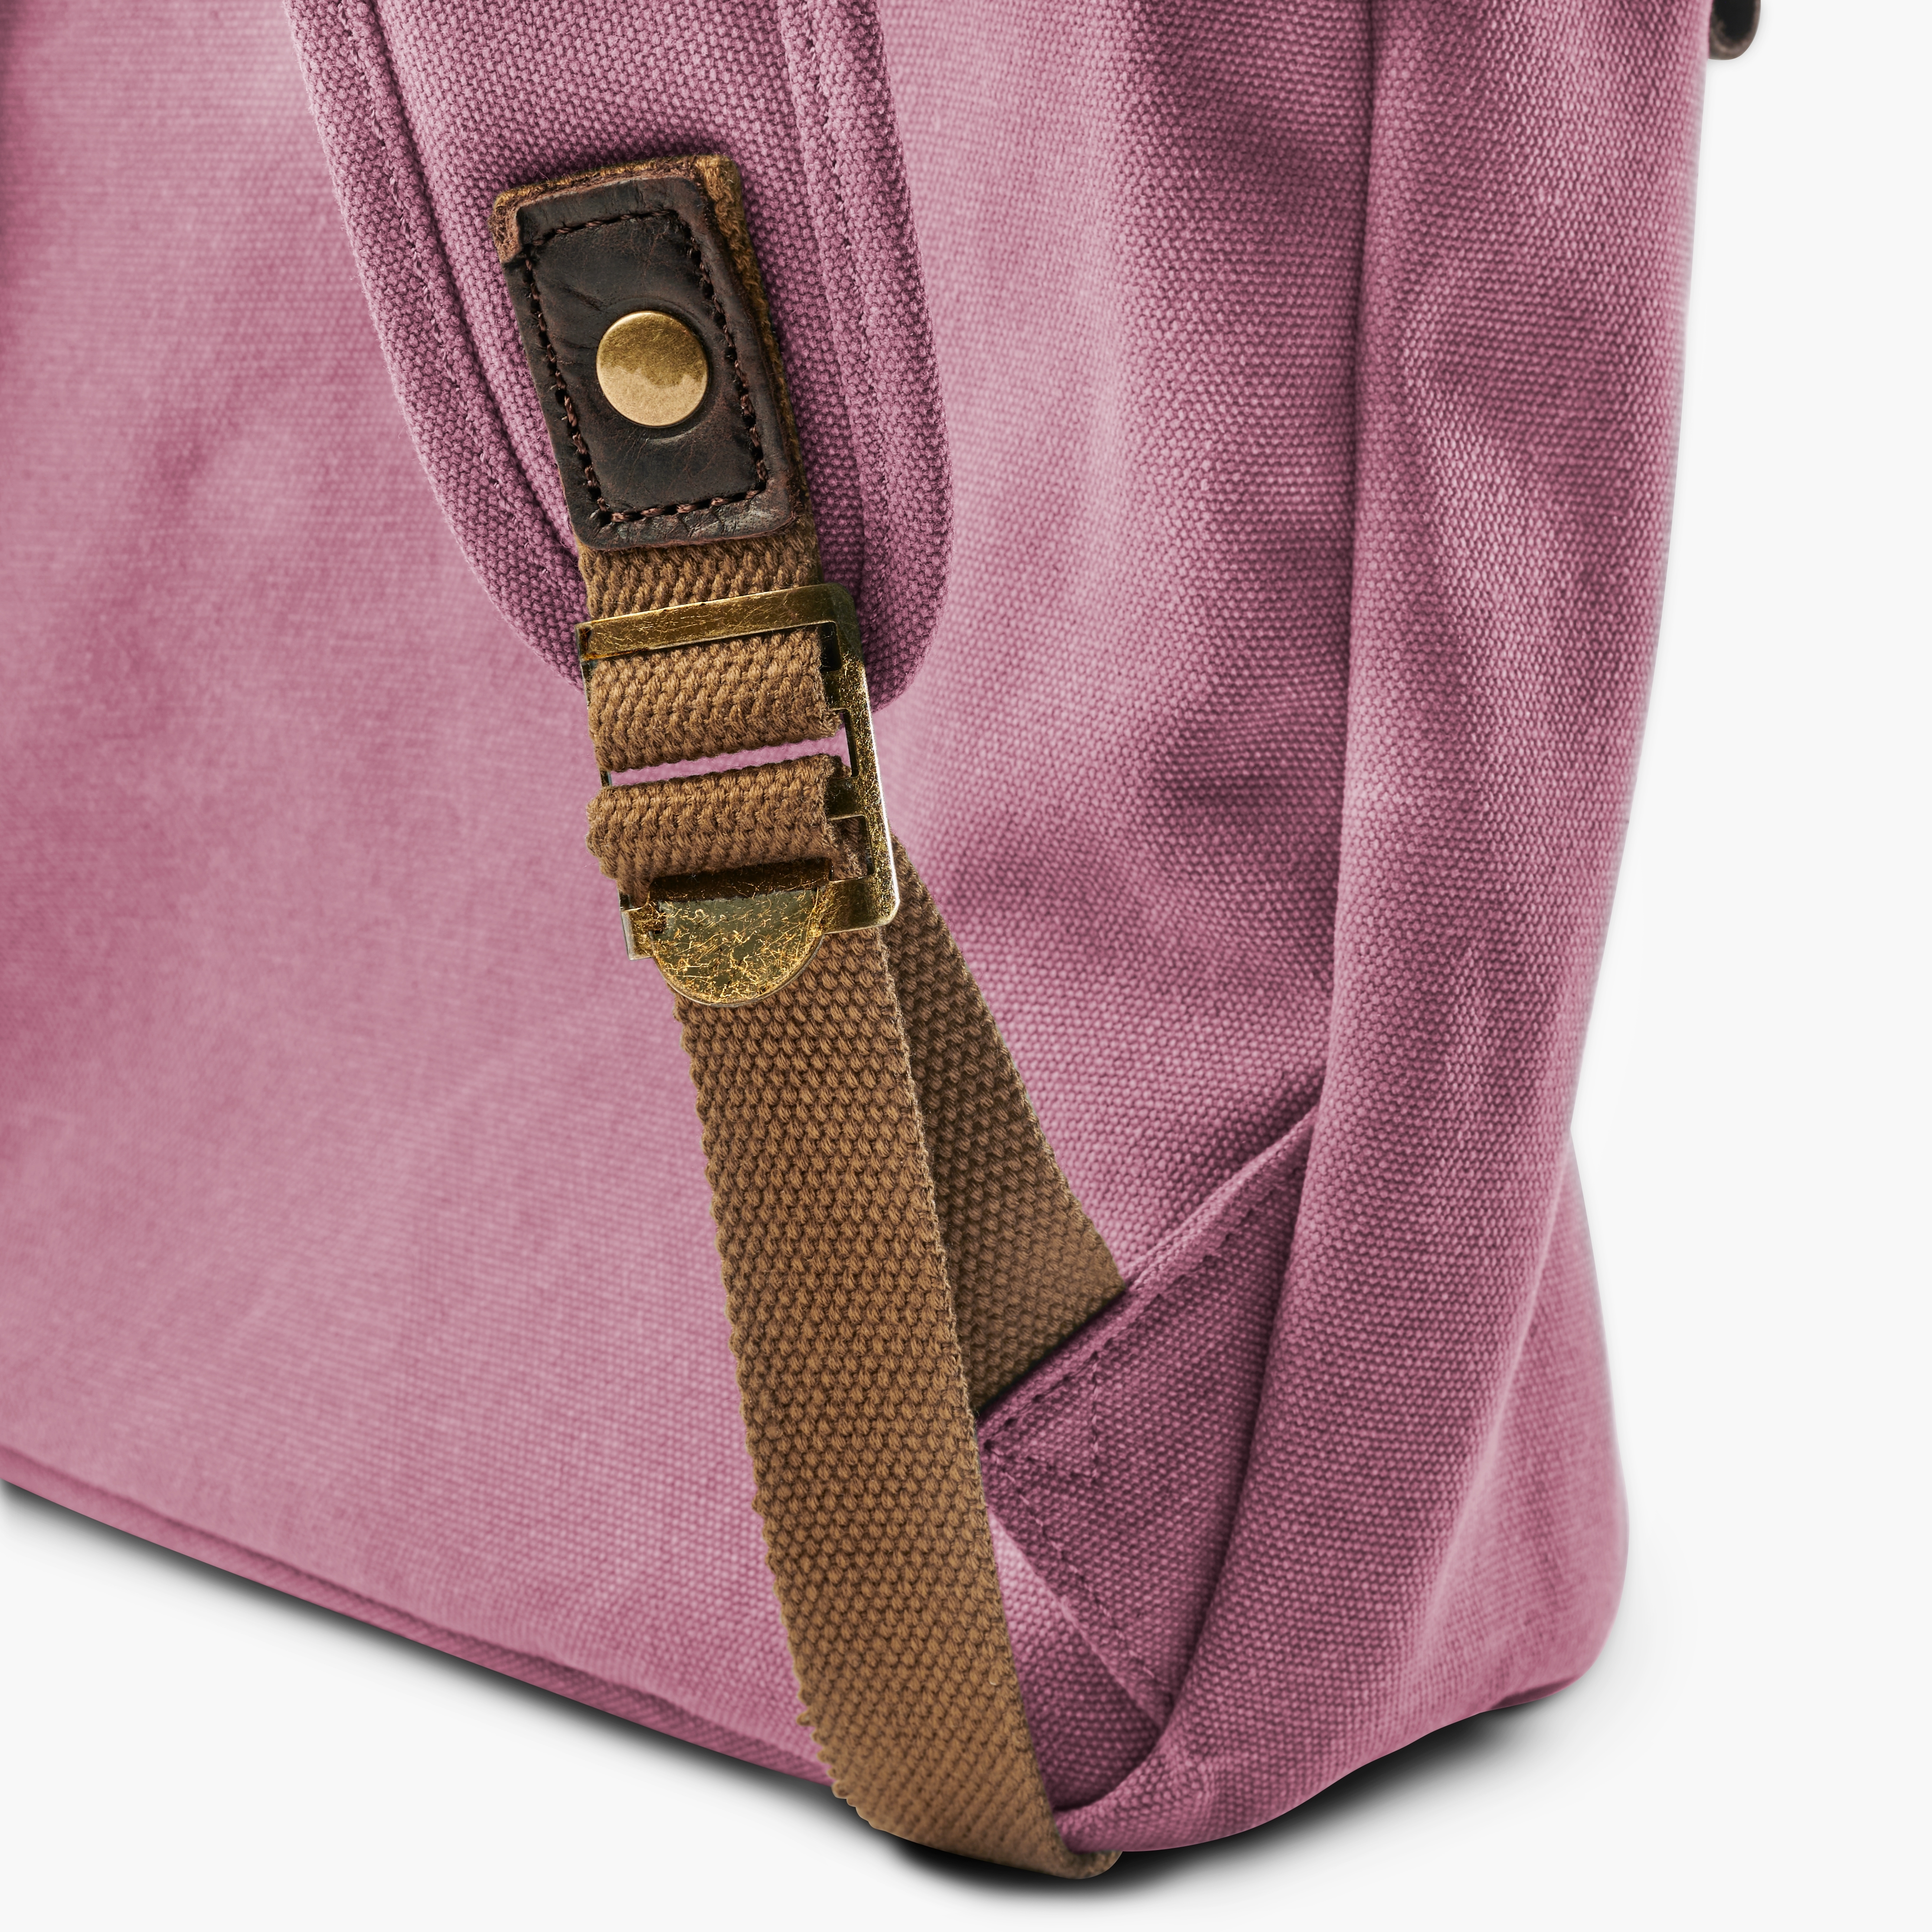 Vintage-Style Pink Canvas & Dark Leather Backpack